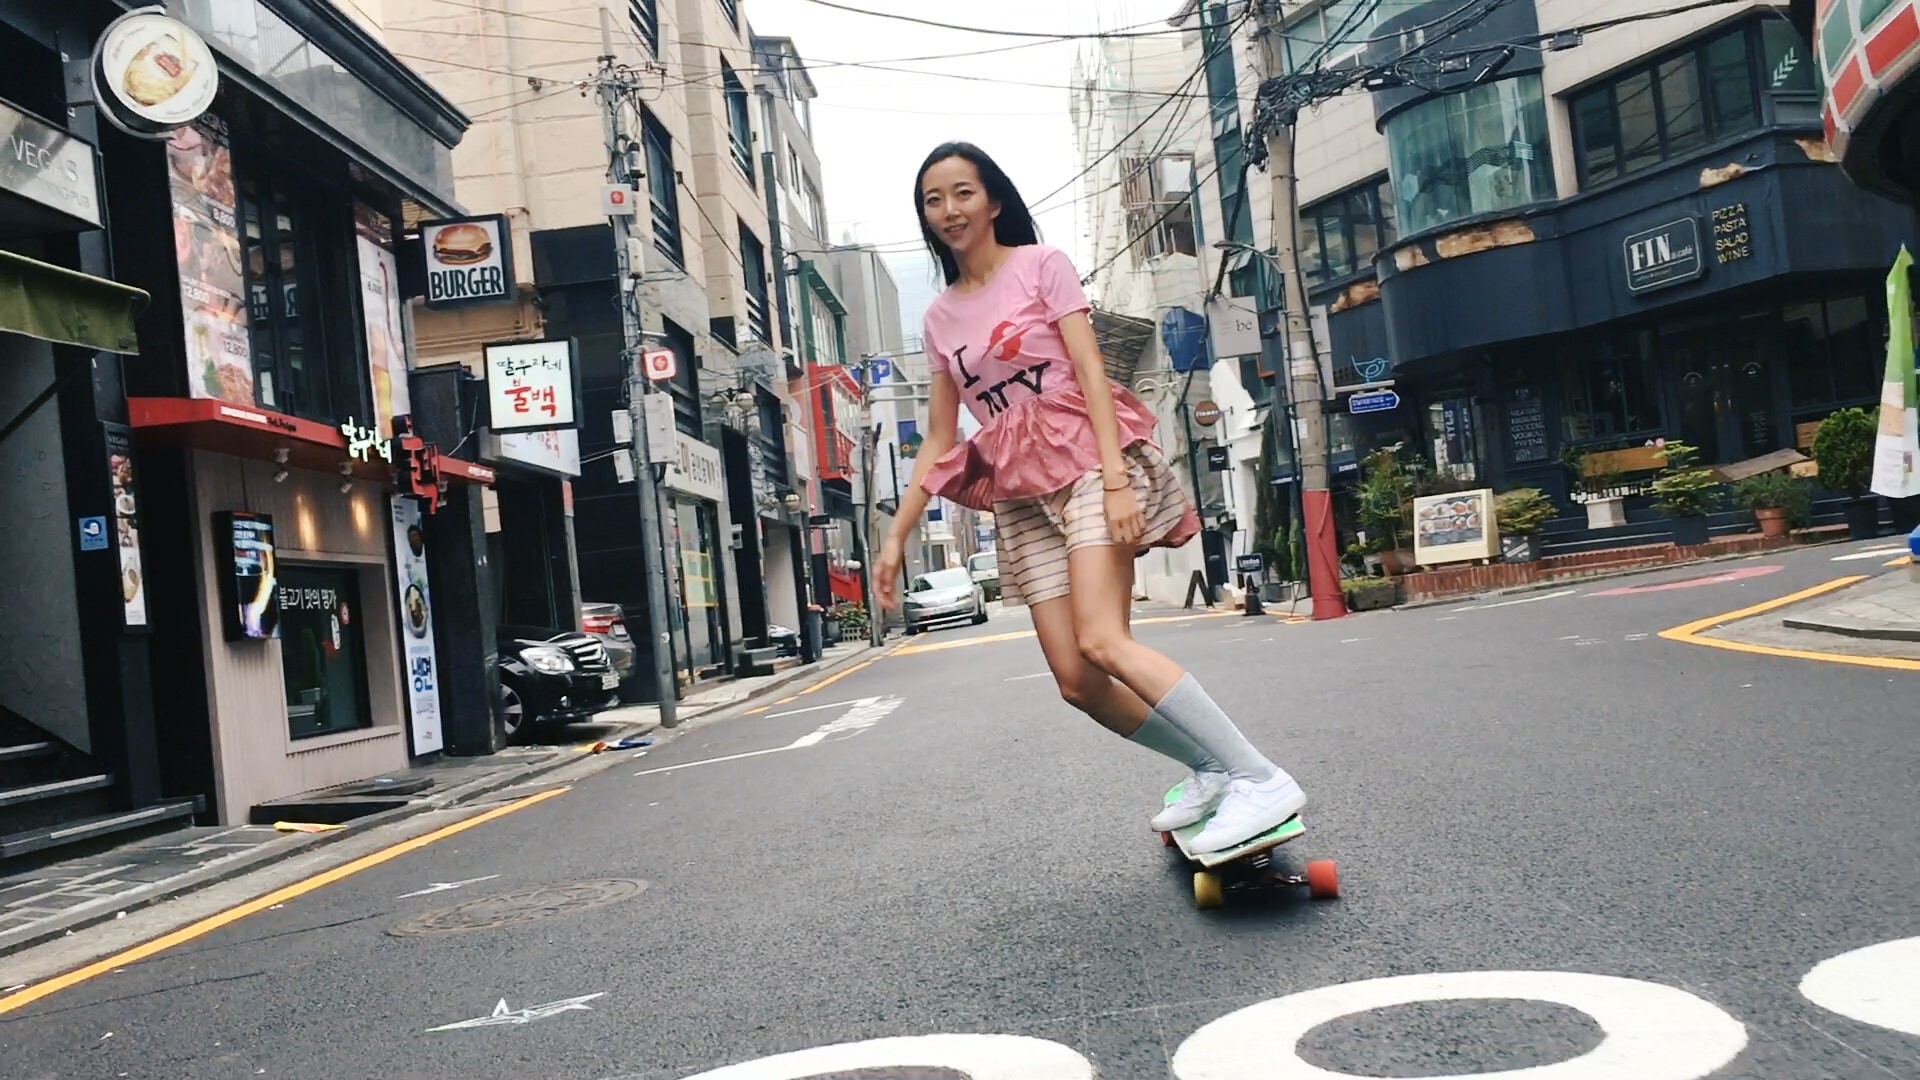 Girl Skateboarding: South Korean longboarder Ko Hyojoo, Seoul, Riding and performing tricks using a longboard. 1920x1080 Full HD Wallpaper.